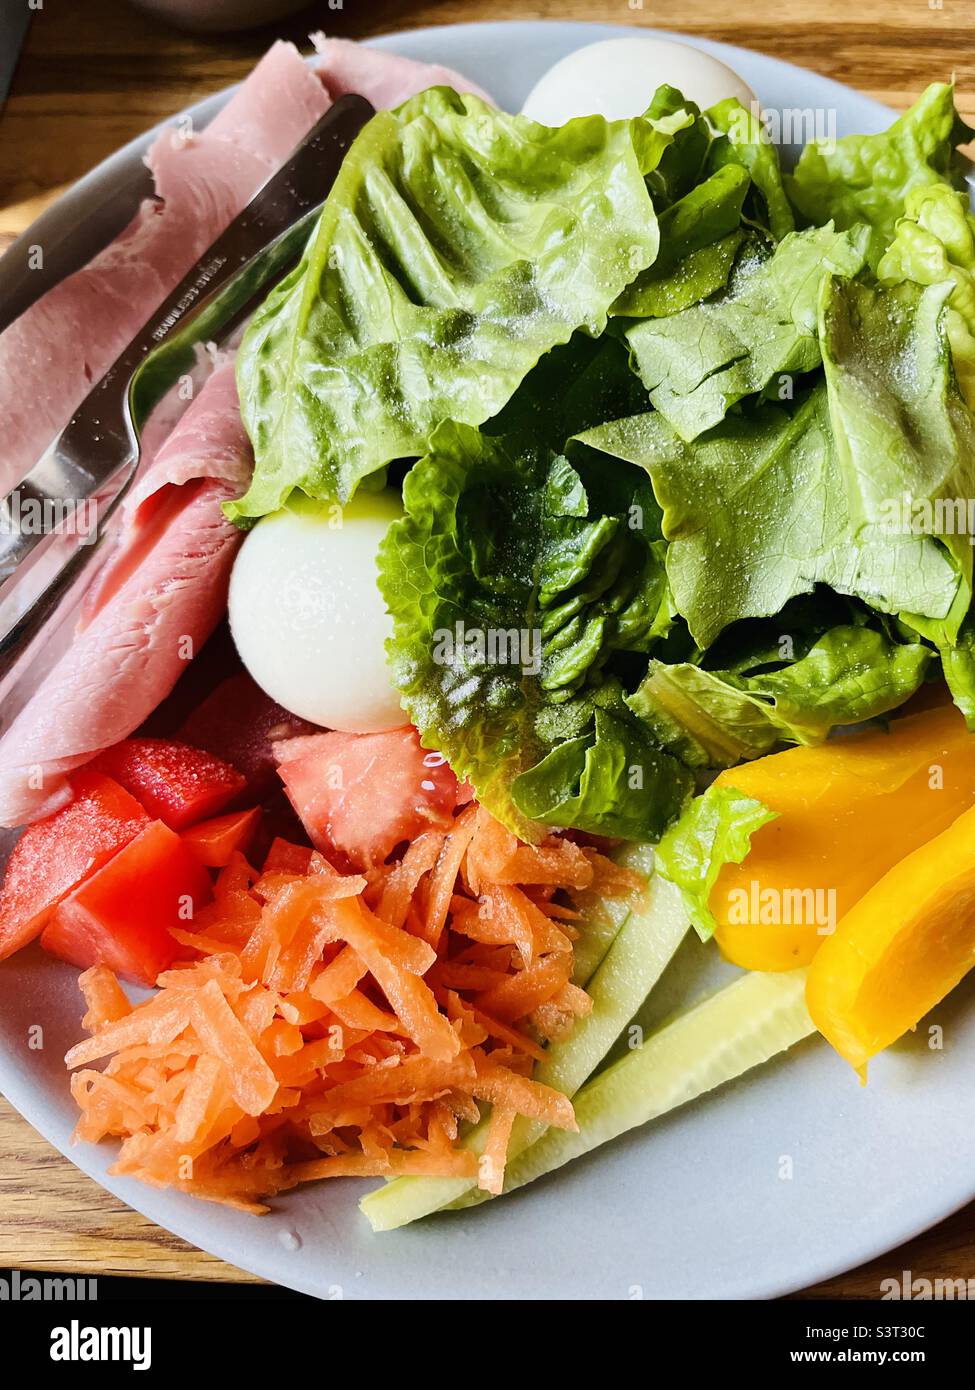 Ham and egg salad Stock Photo